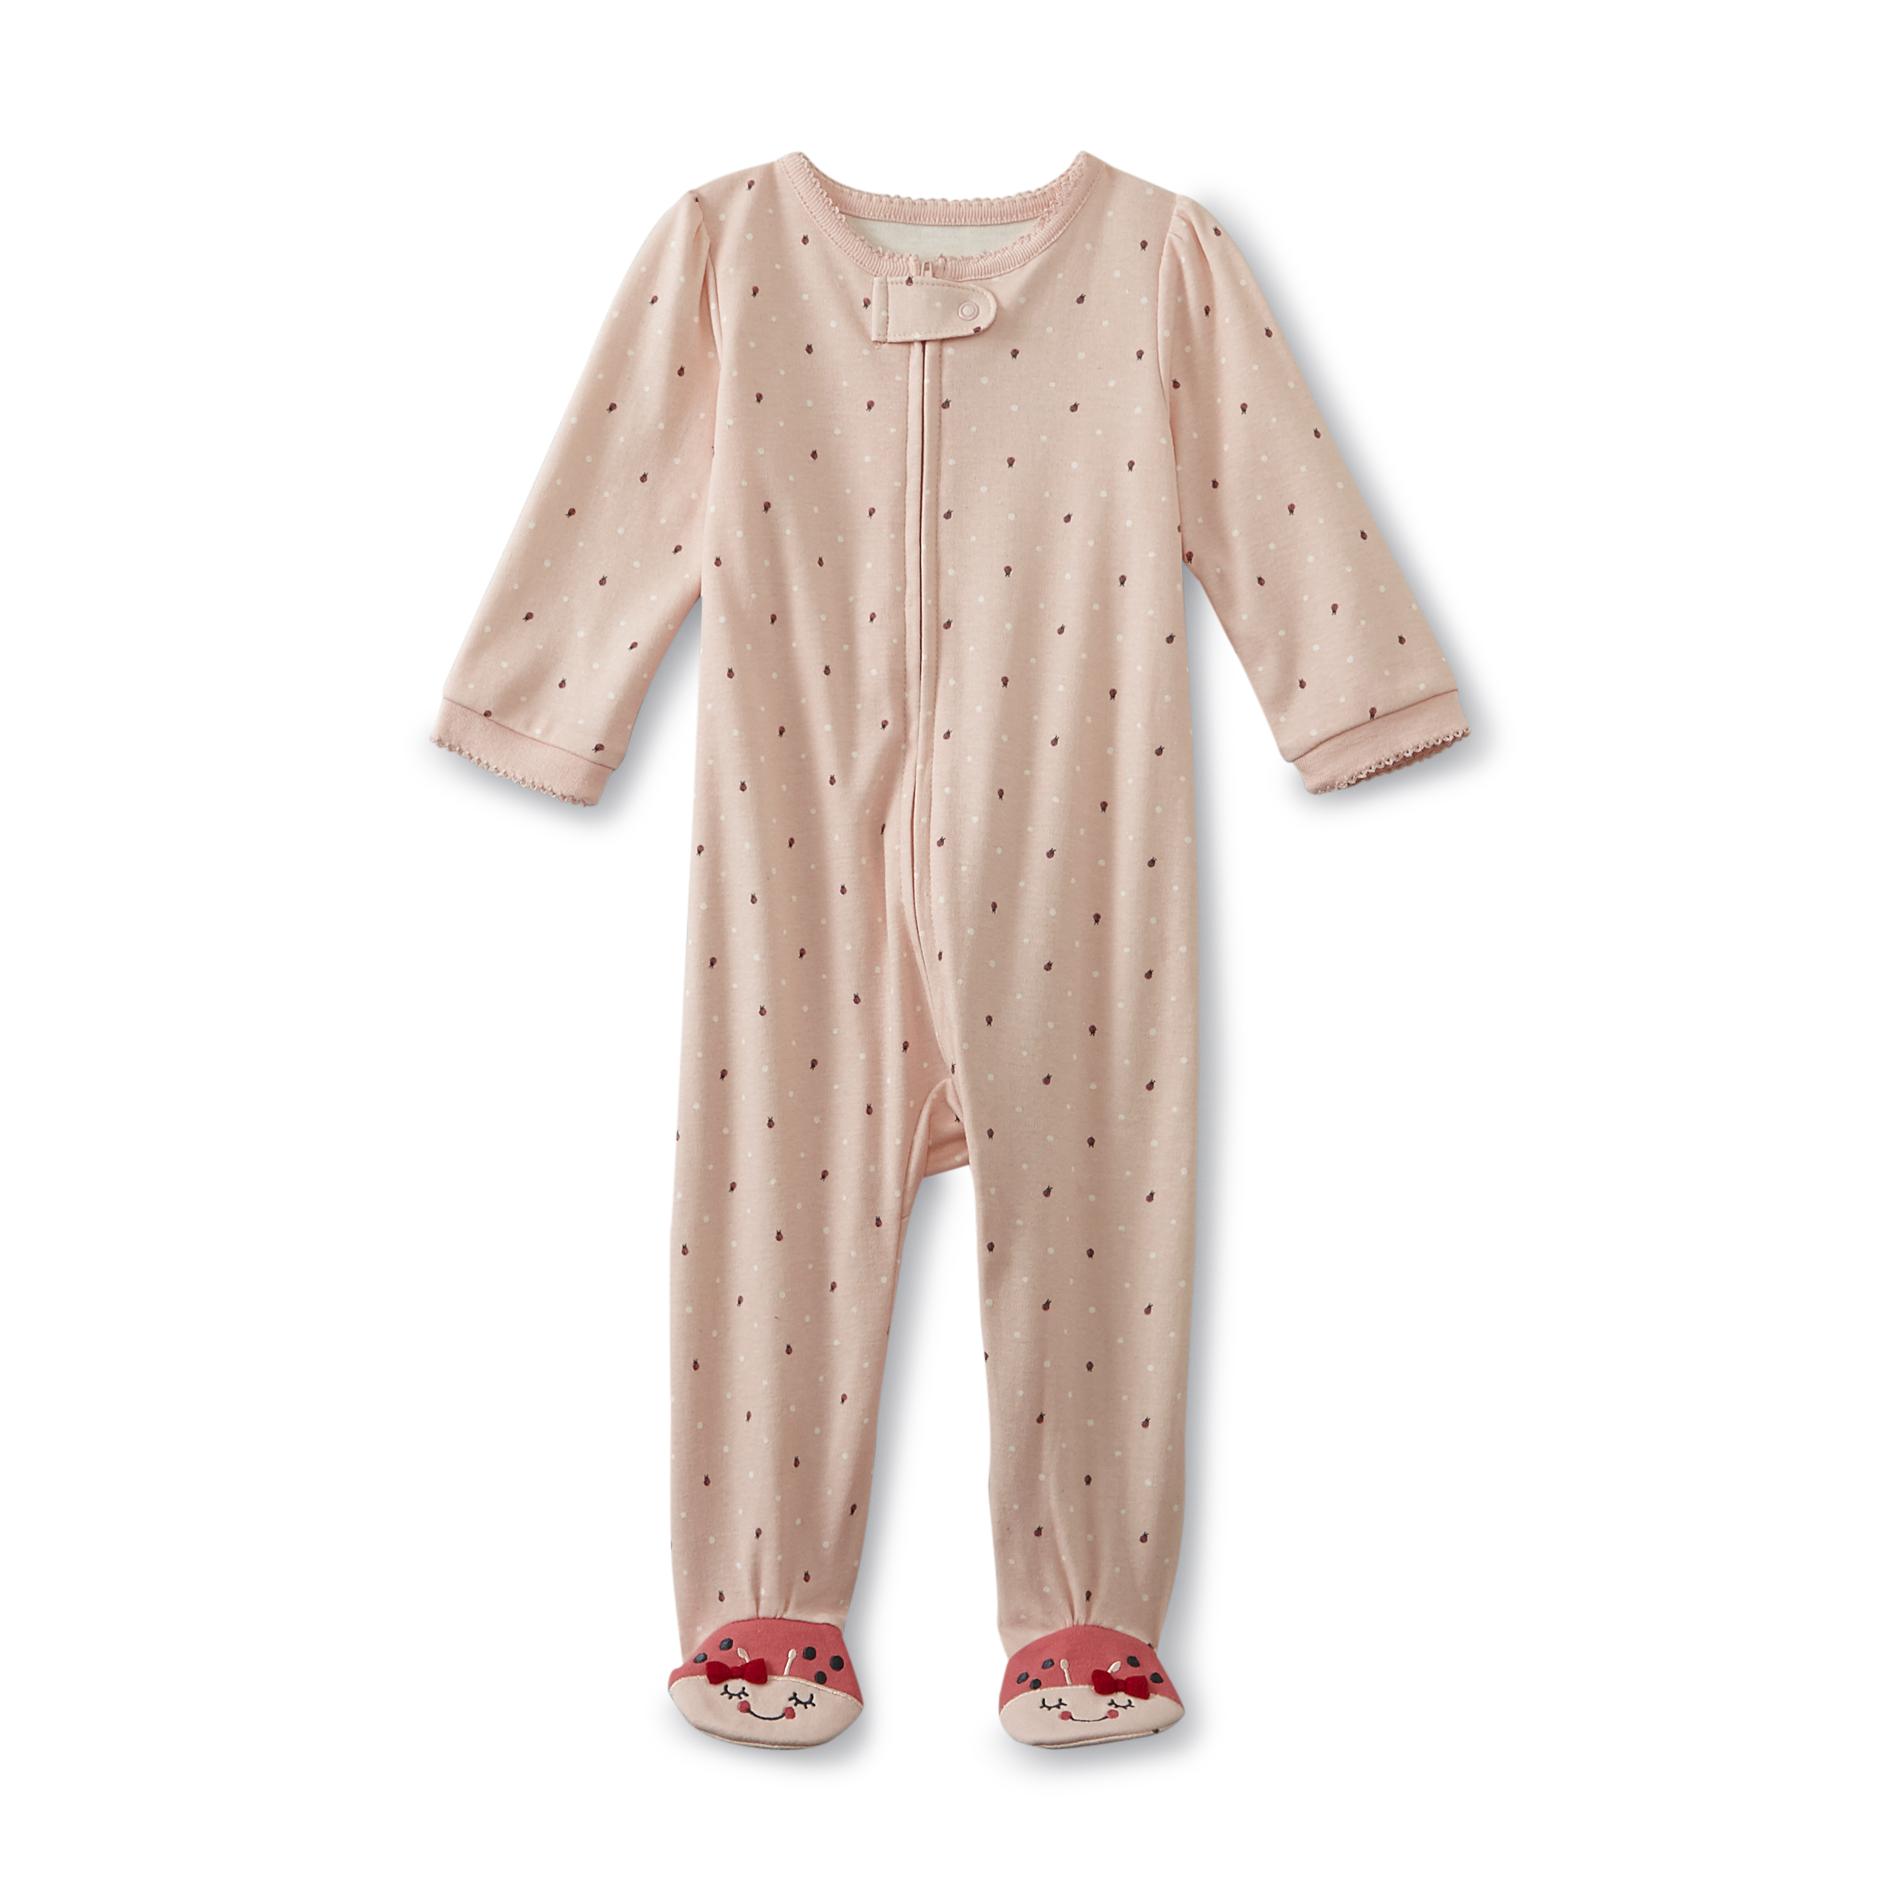 Little Wonders Newborn & Infant Girl's Sleeper Pajamas - Ladybug